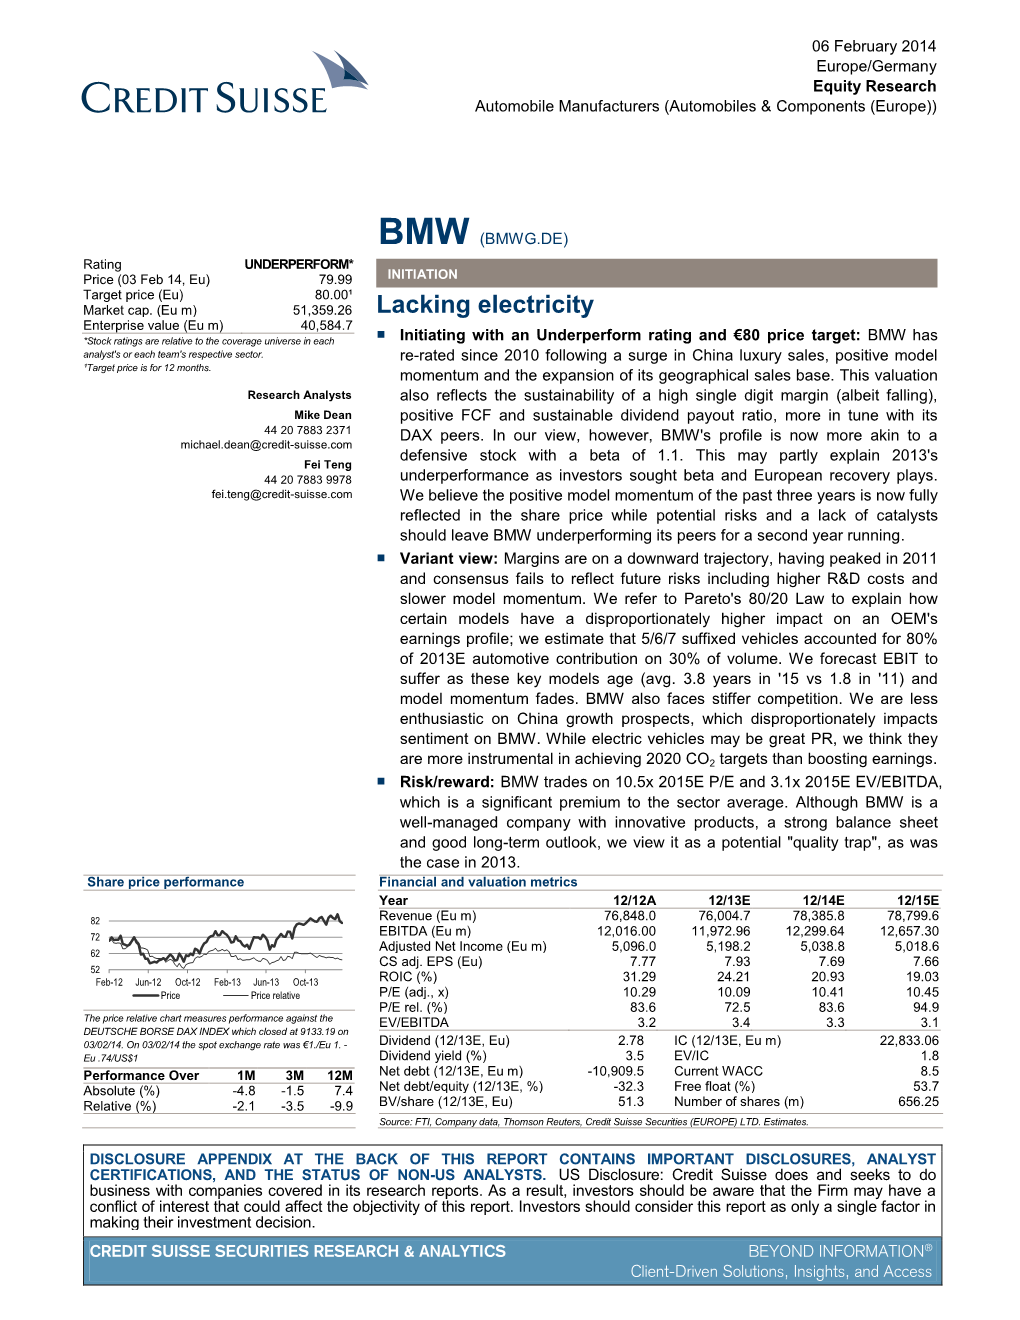 BMW (BMWG.DE) Rating UNDERPERFORM* Price (03 Feb 14, Eu) 79.99 INITIATION